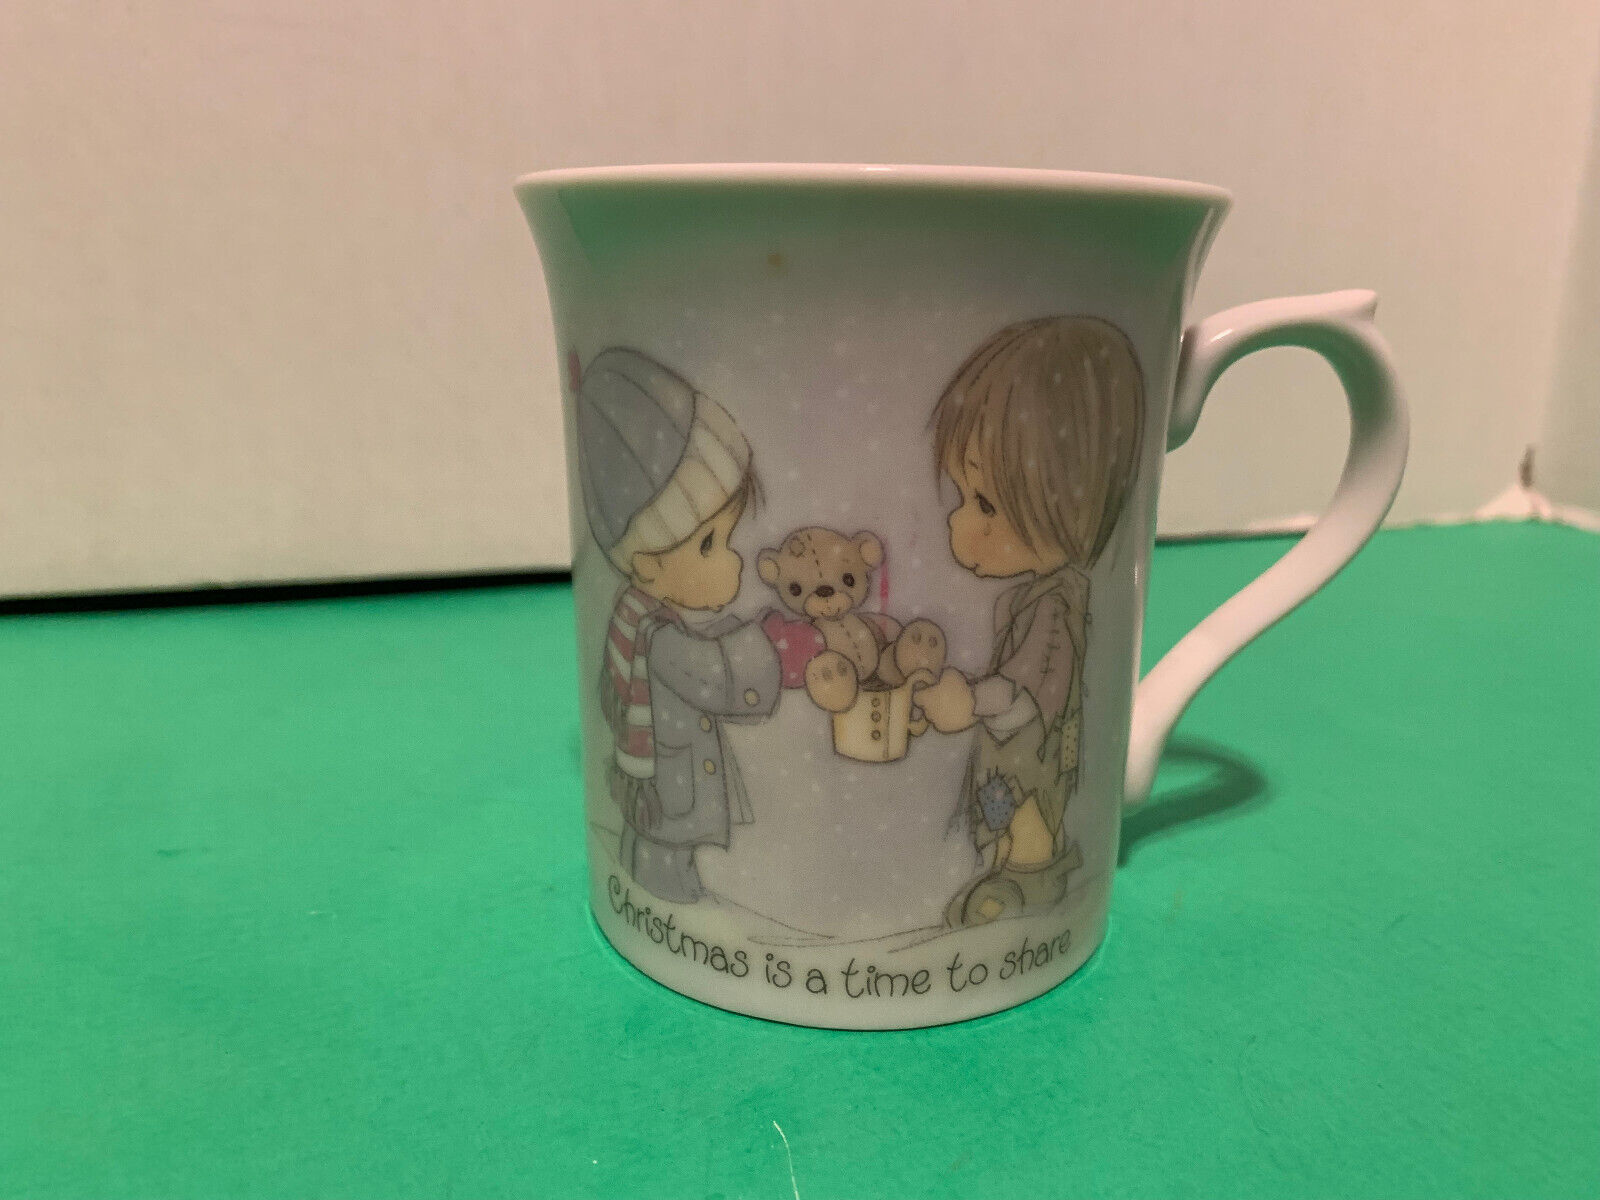 Vintage 1984 Precious Moments "Christmas is a time to share" Ceramic Coffee Mug - $5.99